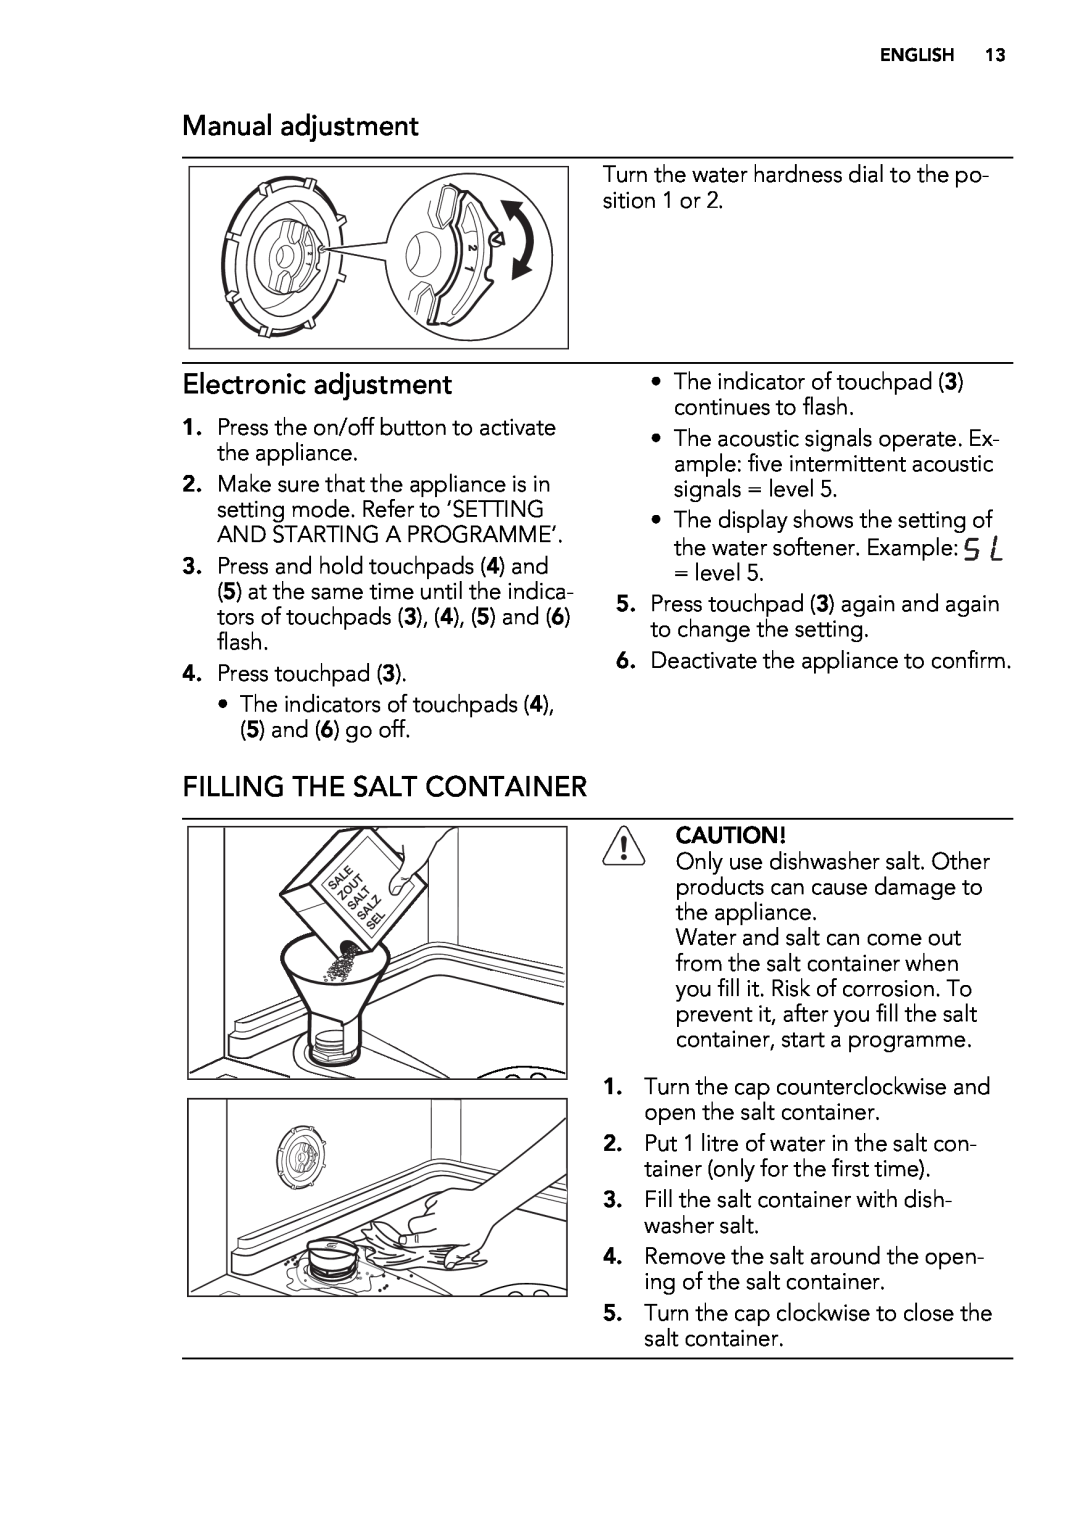 AEG 88060 user manual Manual adjustment, Electronic adjustment, Filling The Salt Container 